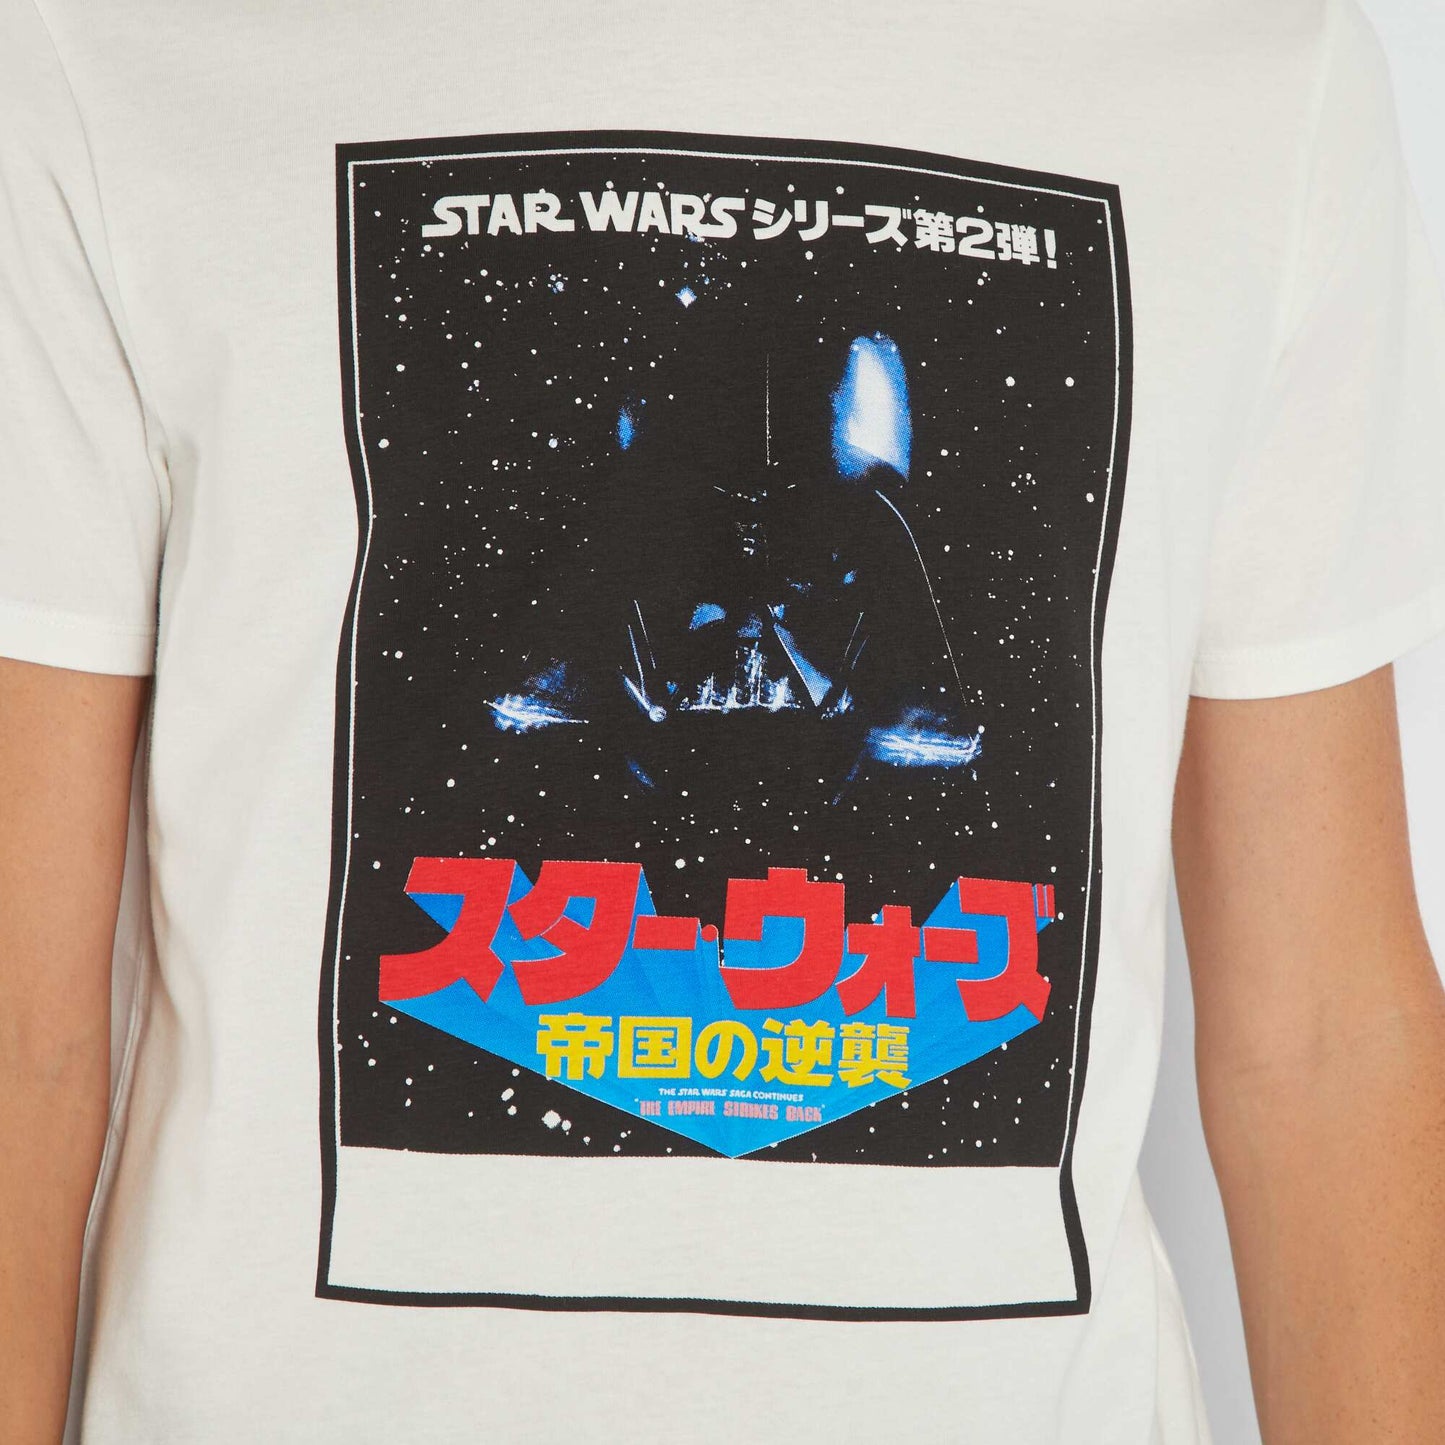 T-shirt 'Star-Wars en Ecru